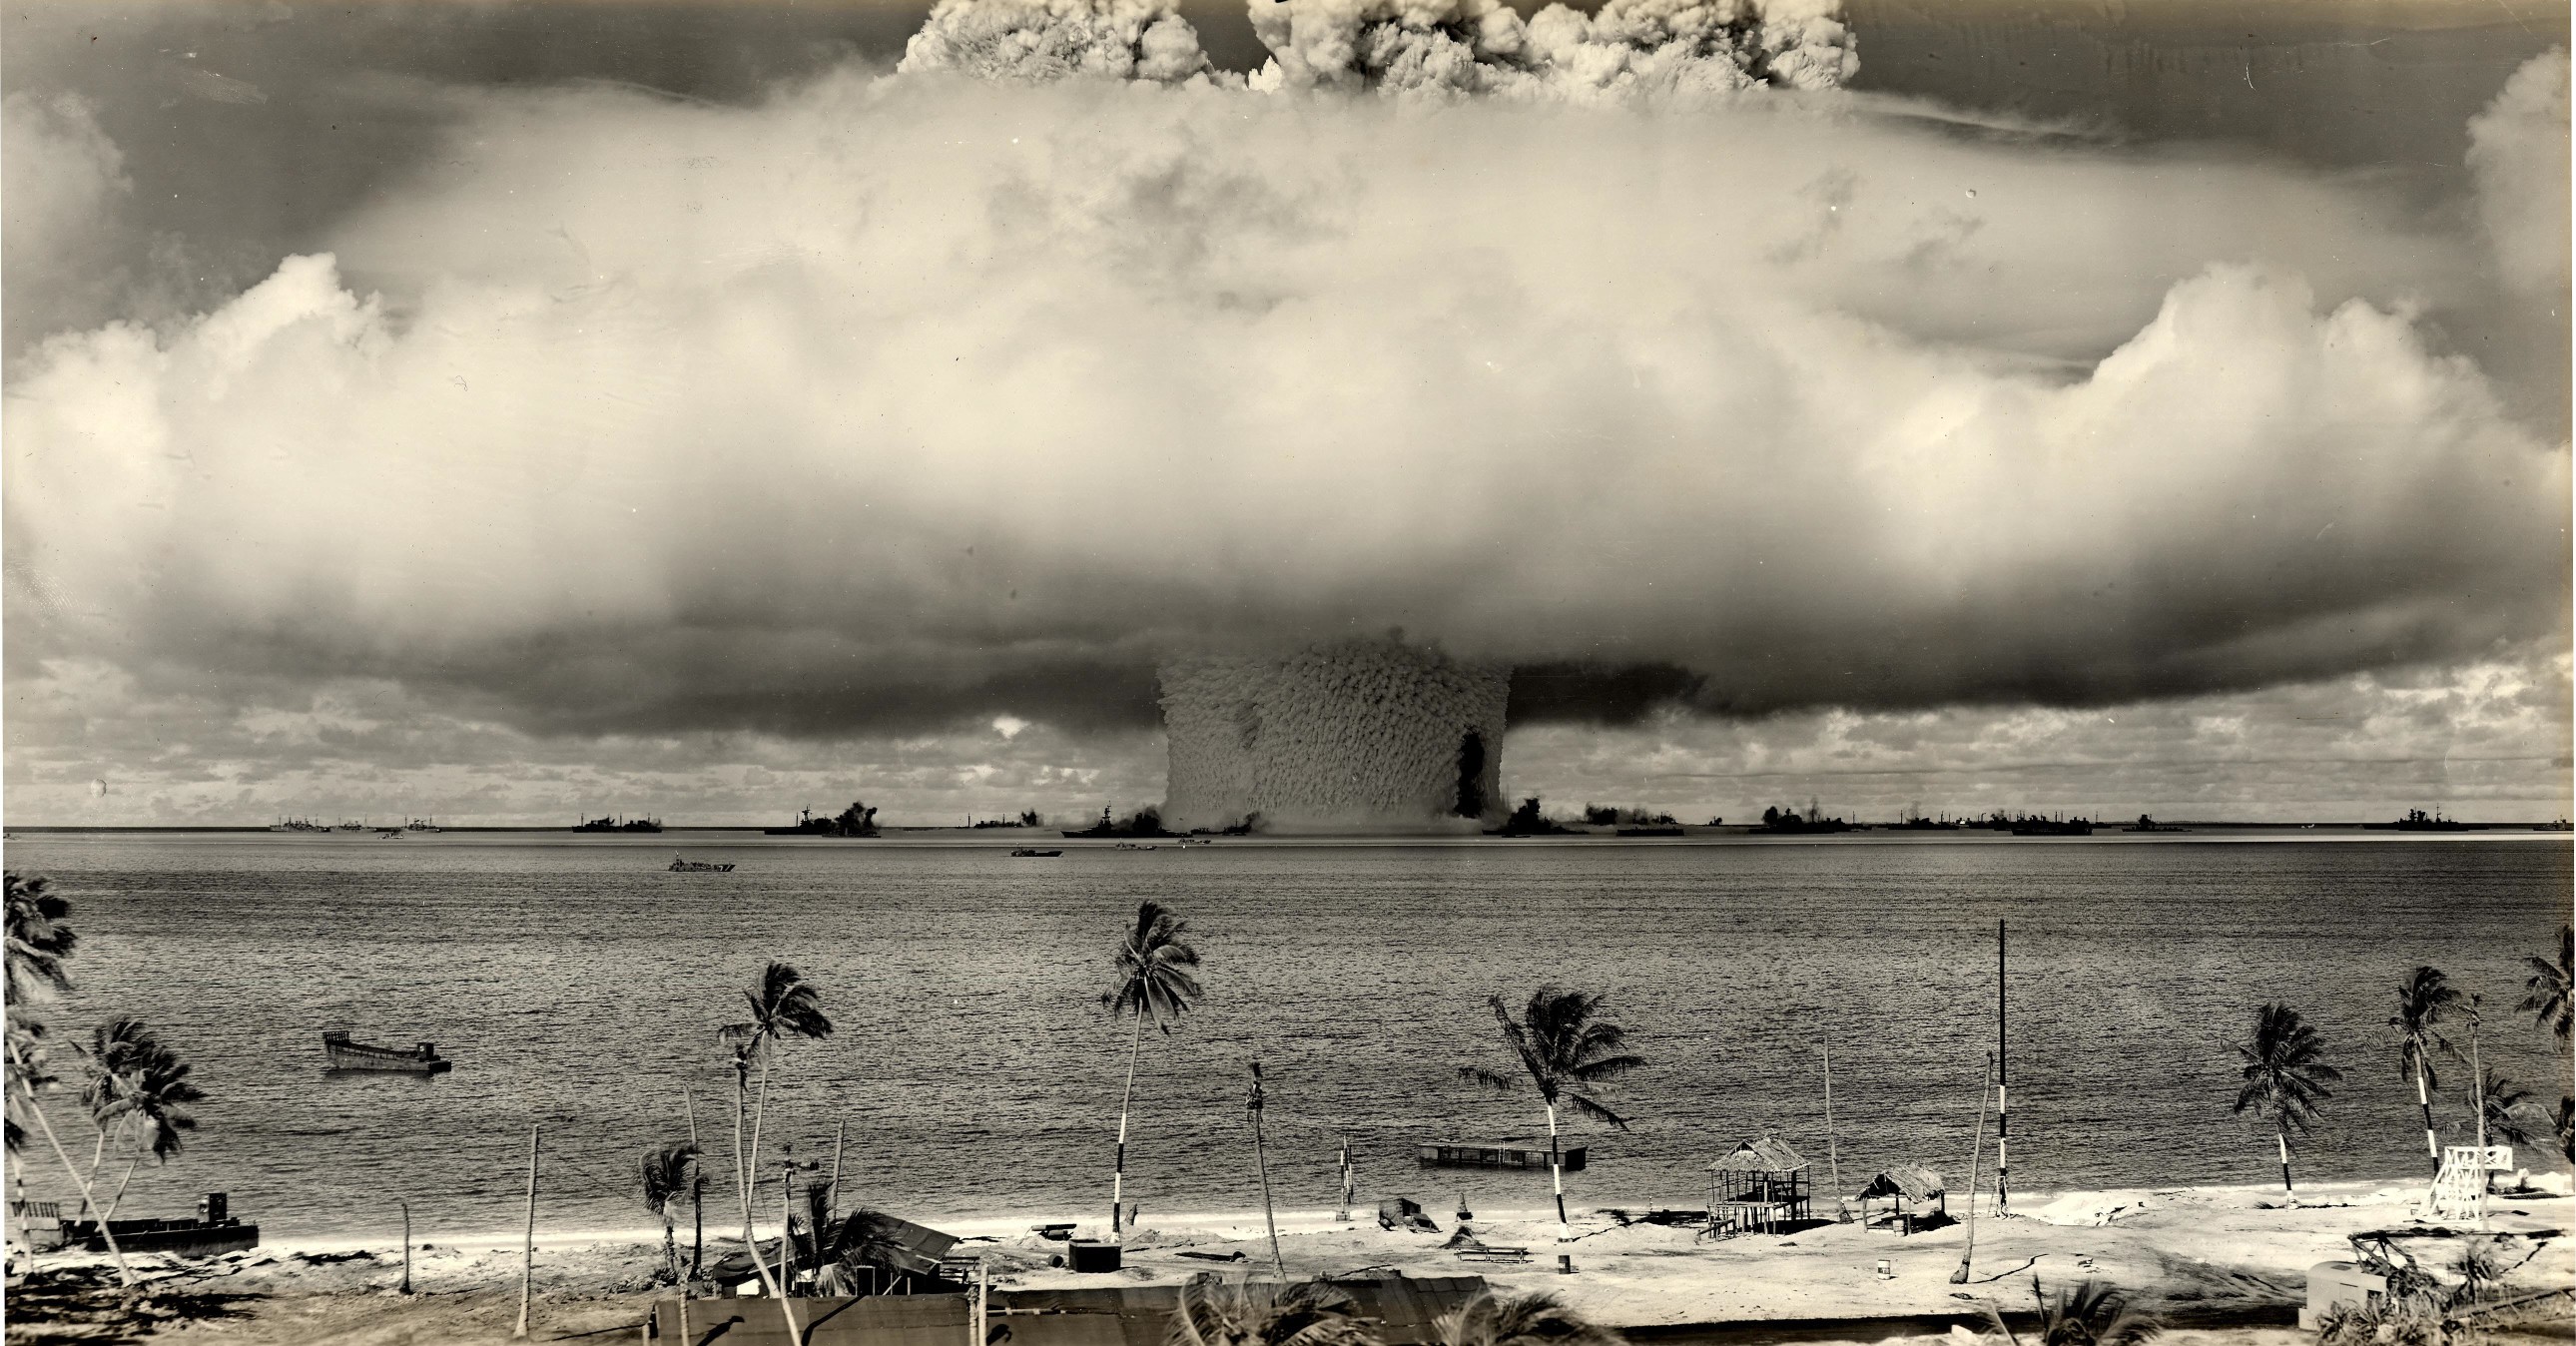 General 2580x1348 atomic bomb military Pacific Ocean explosion nuclear palm trees vintage Bikini Atoll sepia mushroom clouds